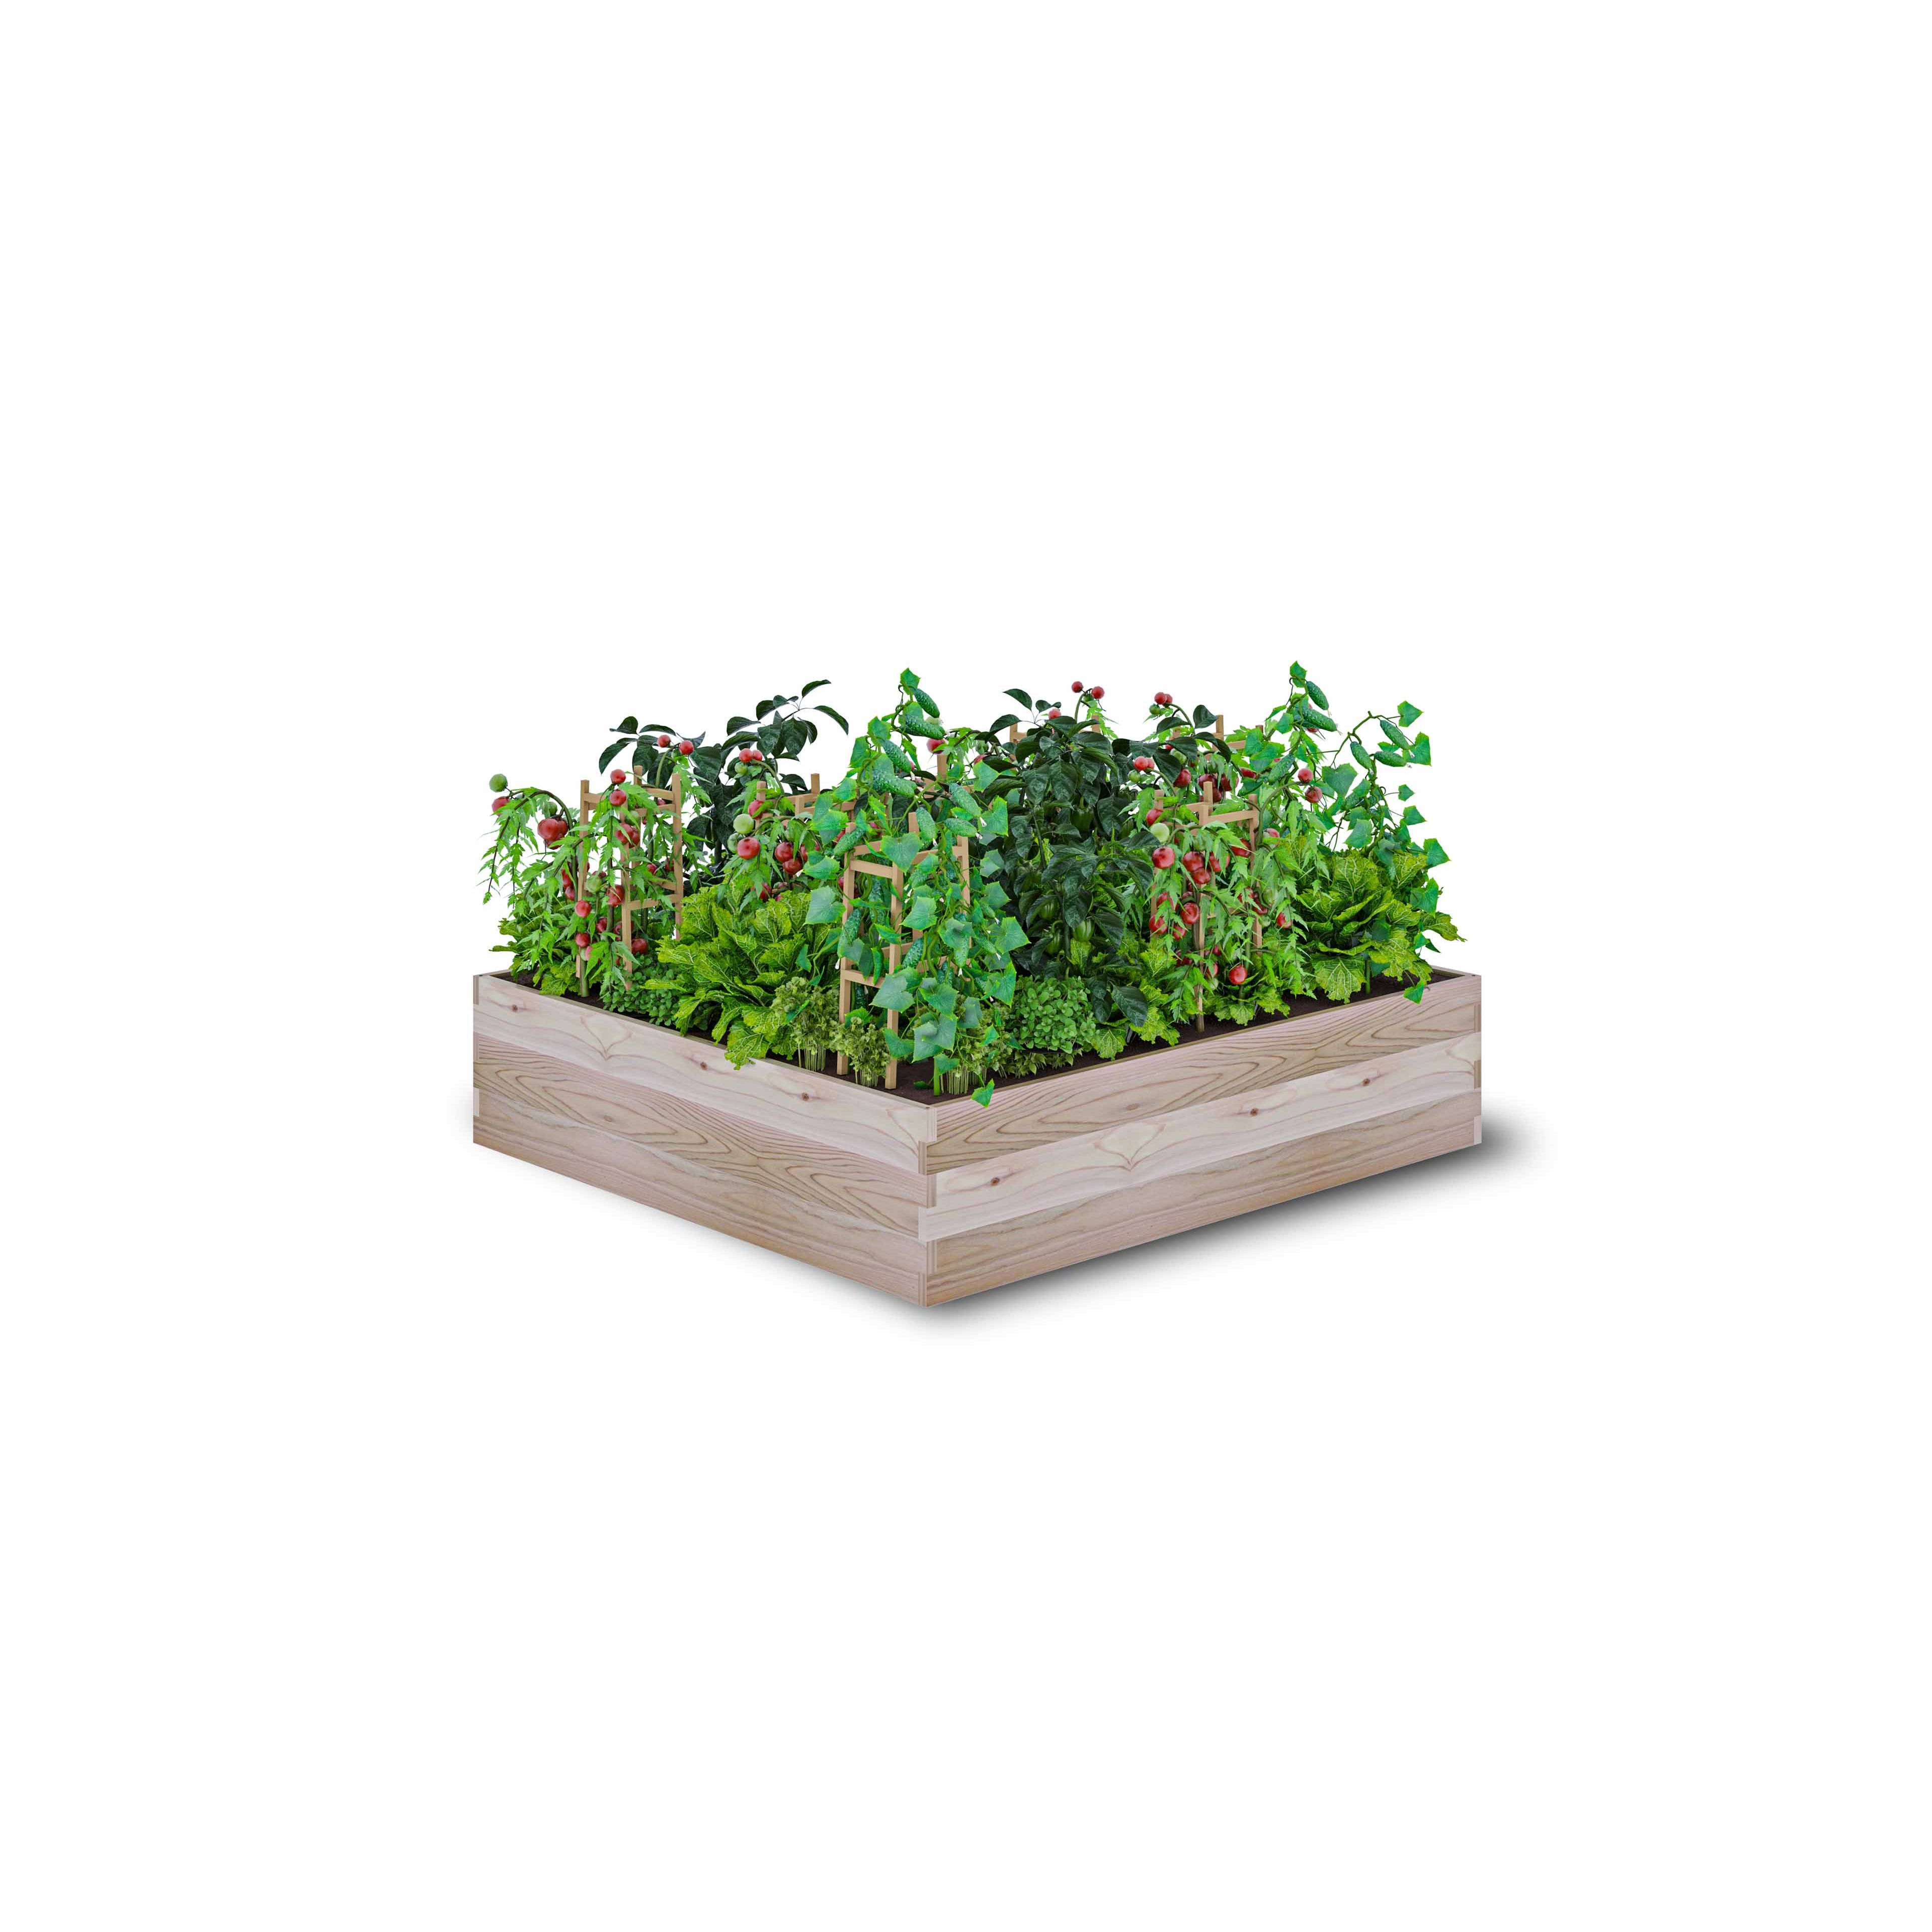 Cedar Raised Garden Bed (45 x 45 x 10.5"H)